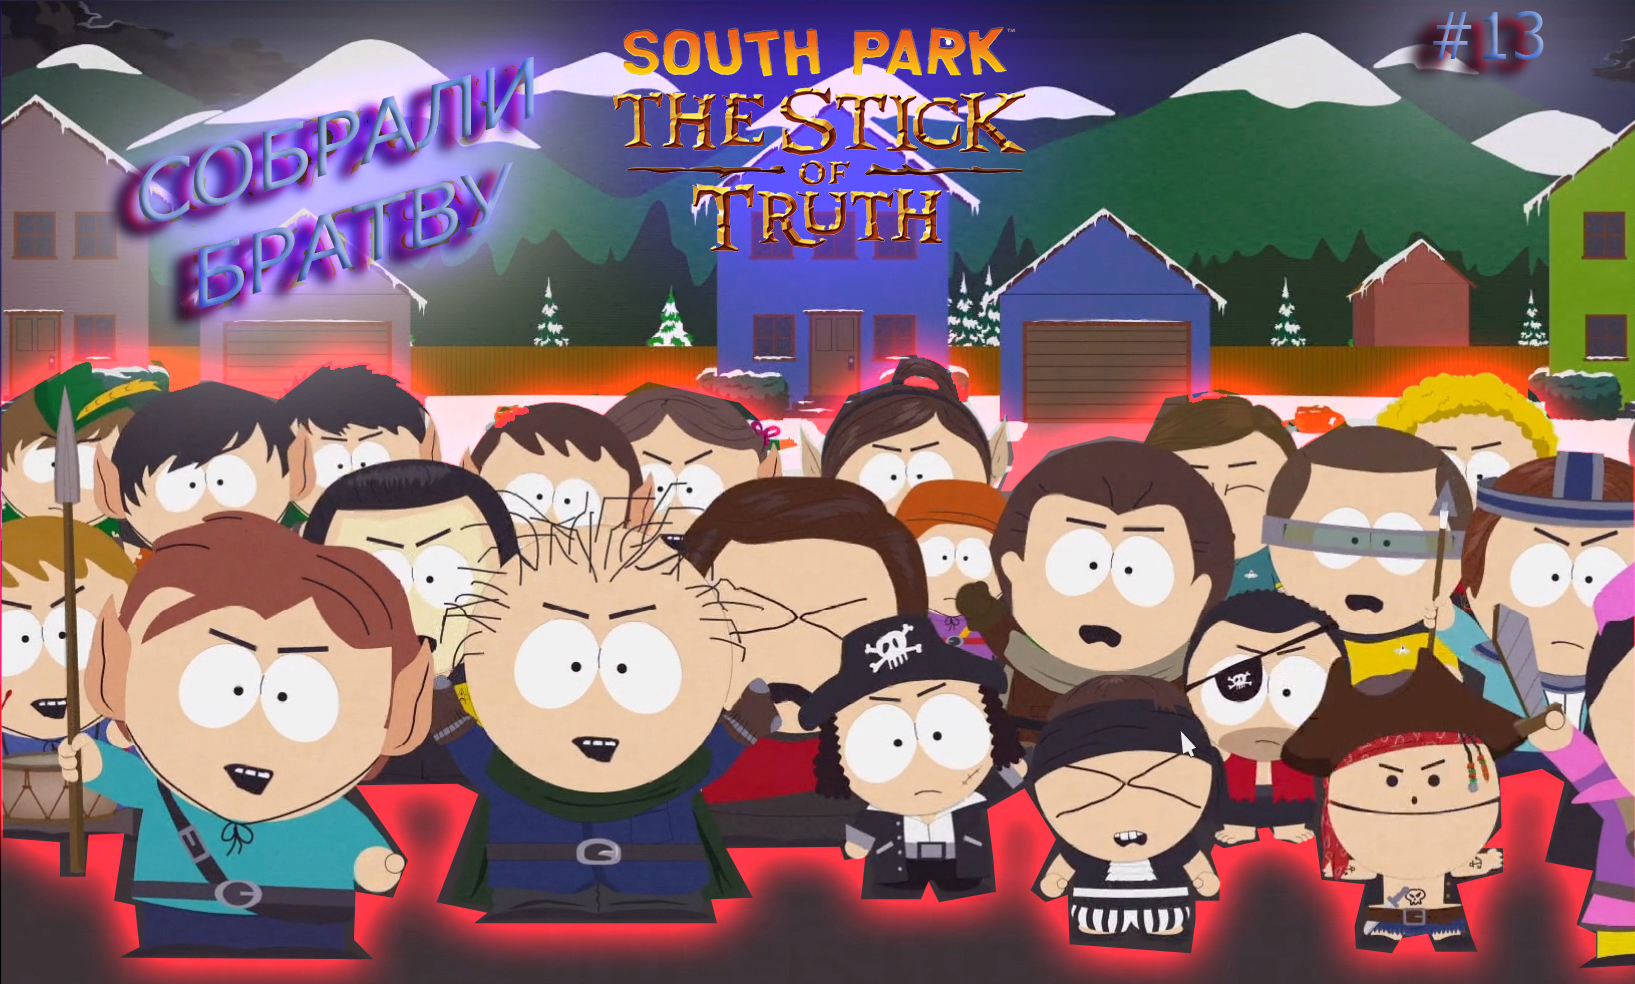 South Park: The Stick of Truth #13. СОБРАЛИ БРАТВУ.